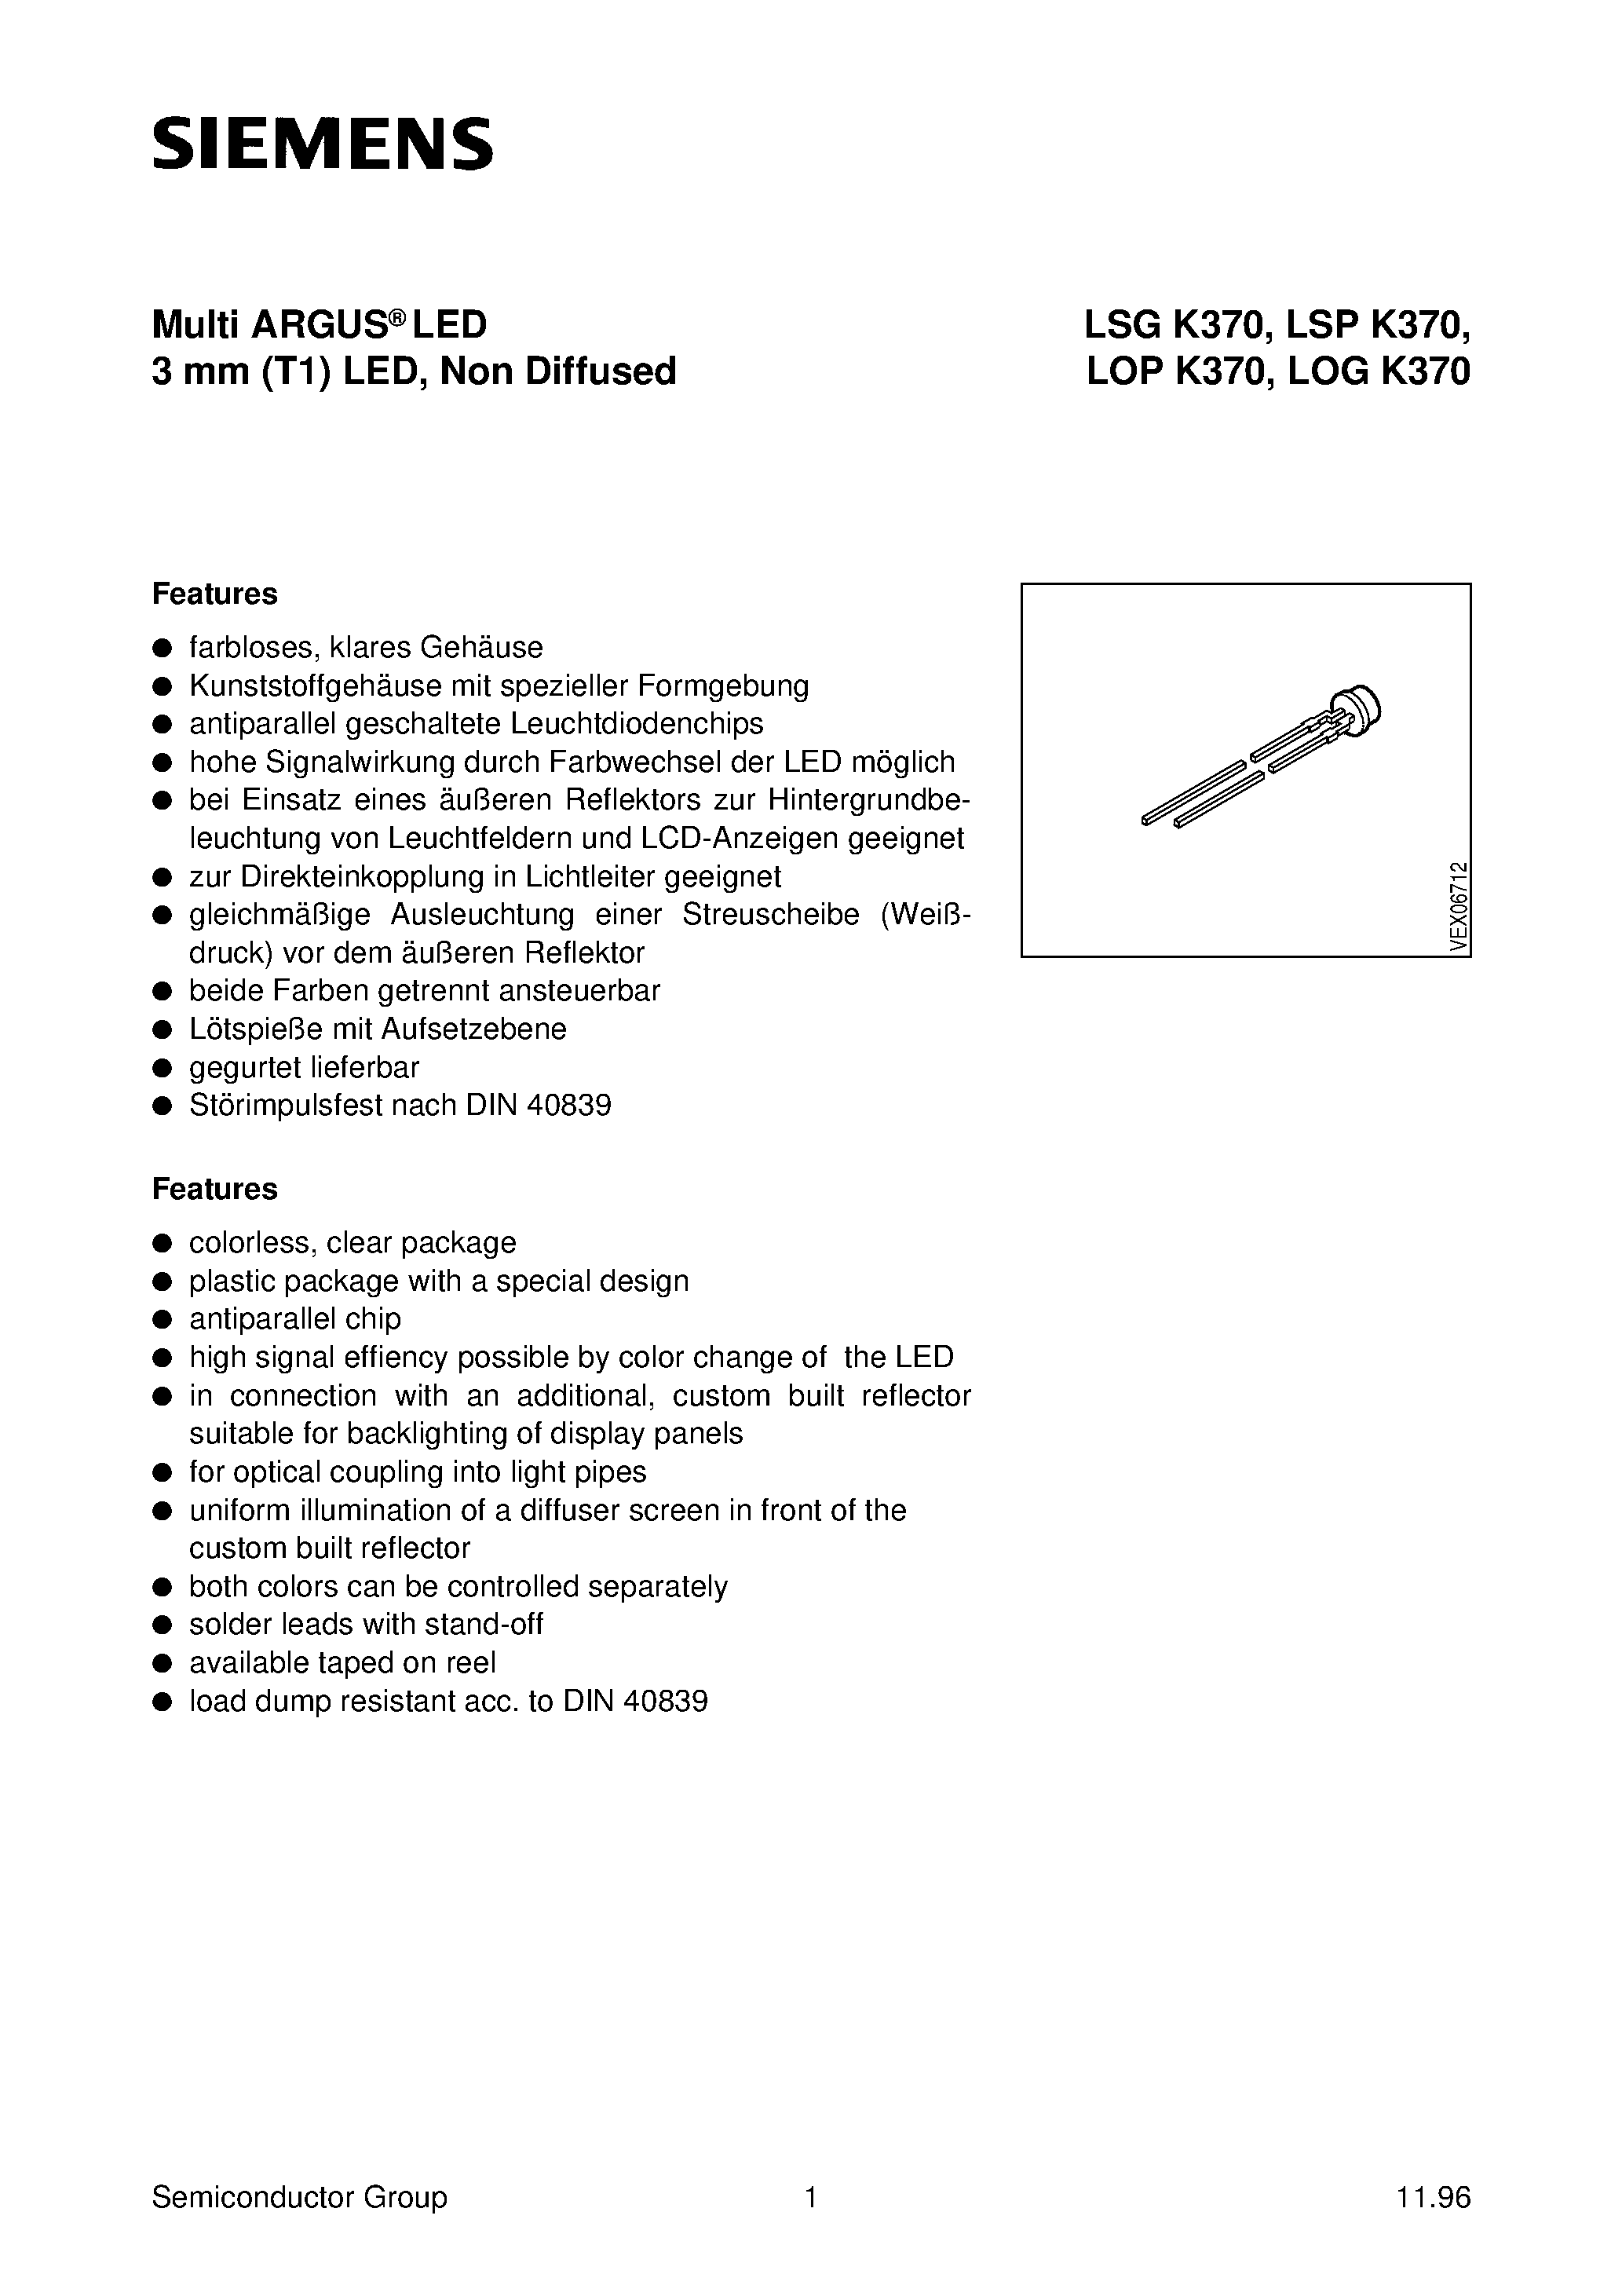 Даташит LSPK370-N - Multi ARGUS LED 3 mm T1 LED / Non Diffused страница 1